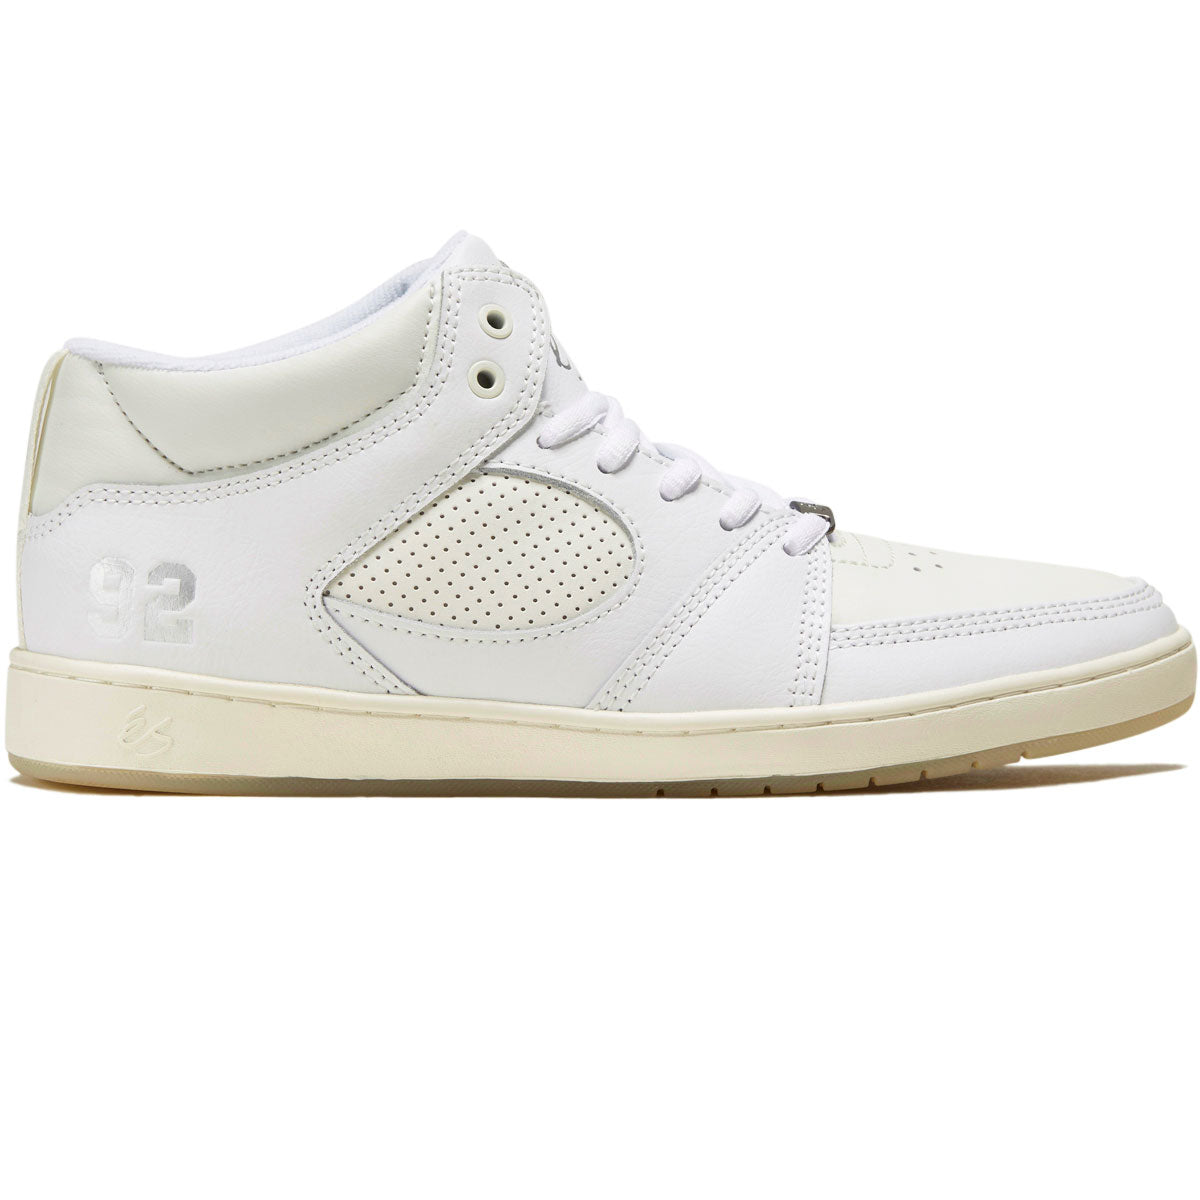 eS Accel Slim Mid Shoes - White/Light Grey image 1